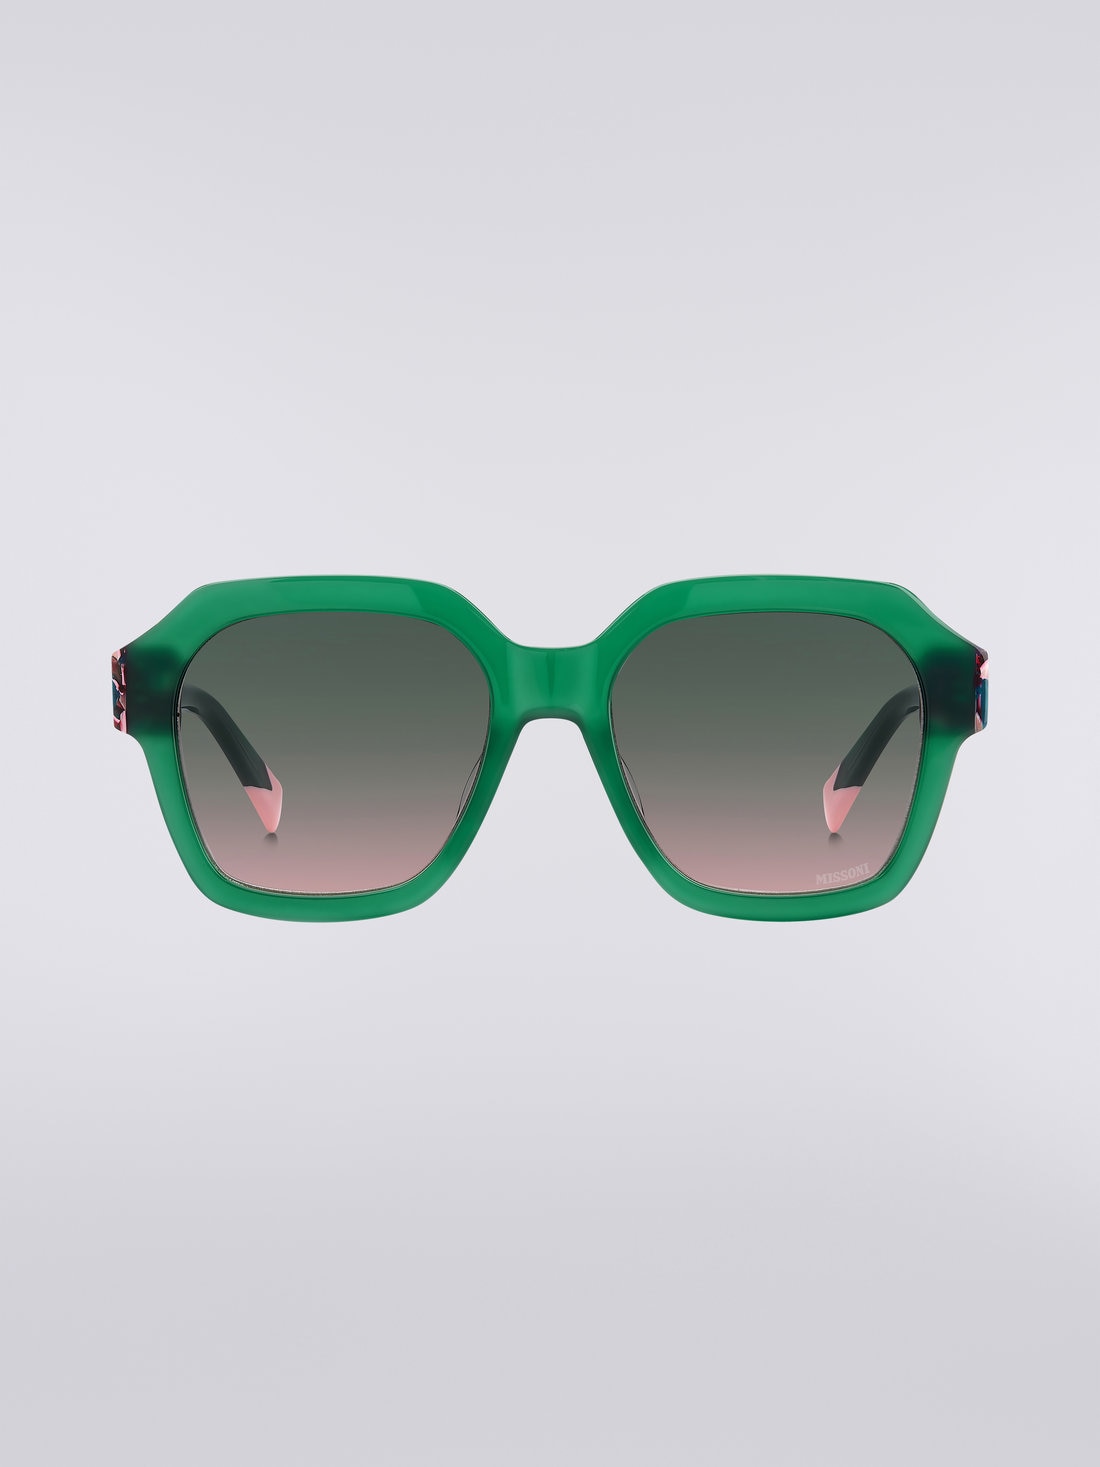 Missoni Seasonal Acetate Sunglasses, Green & Pink - 8051575840159 - 0